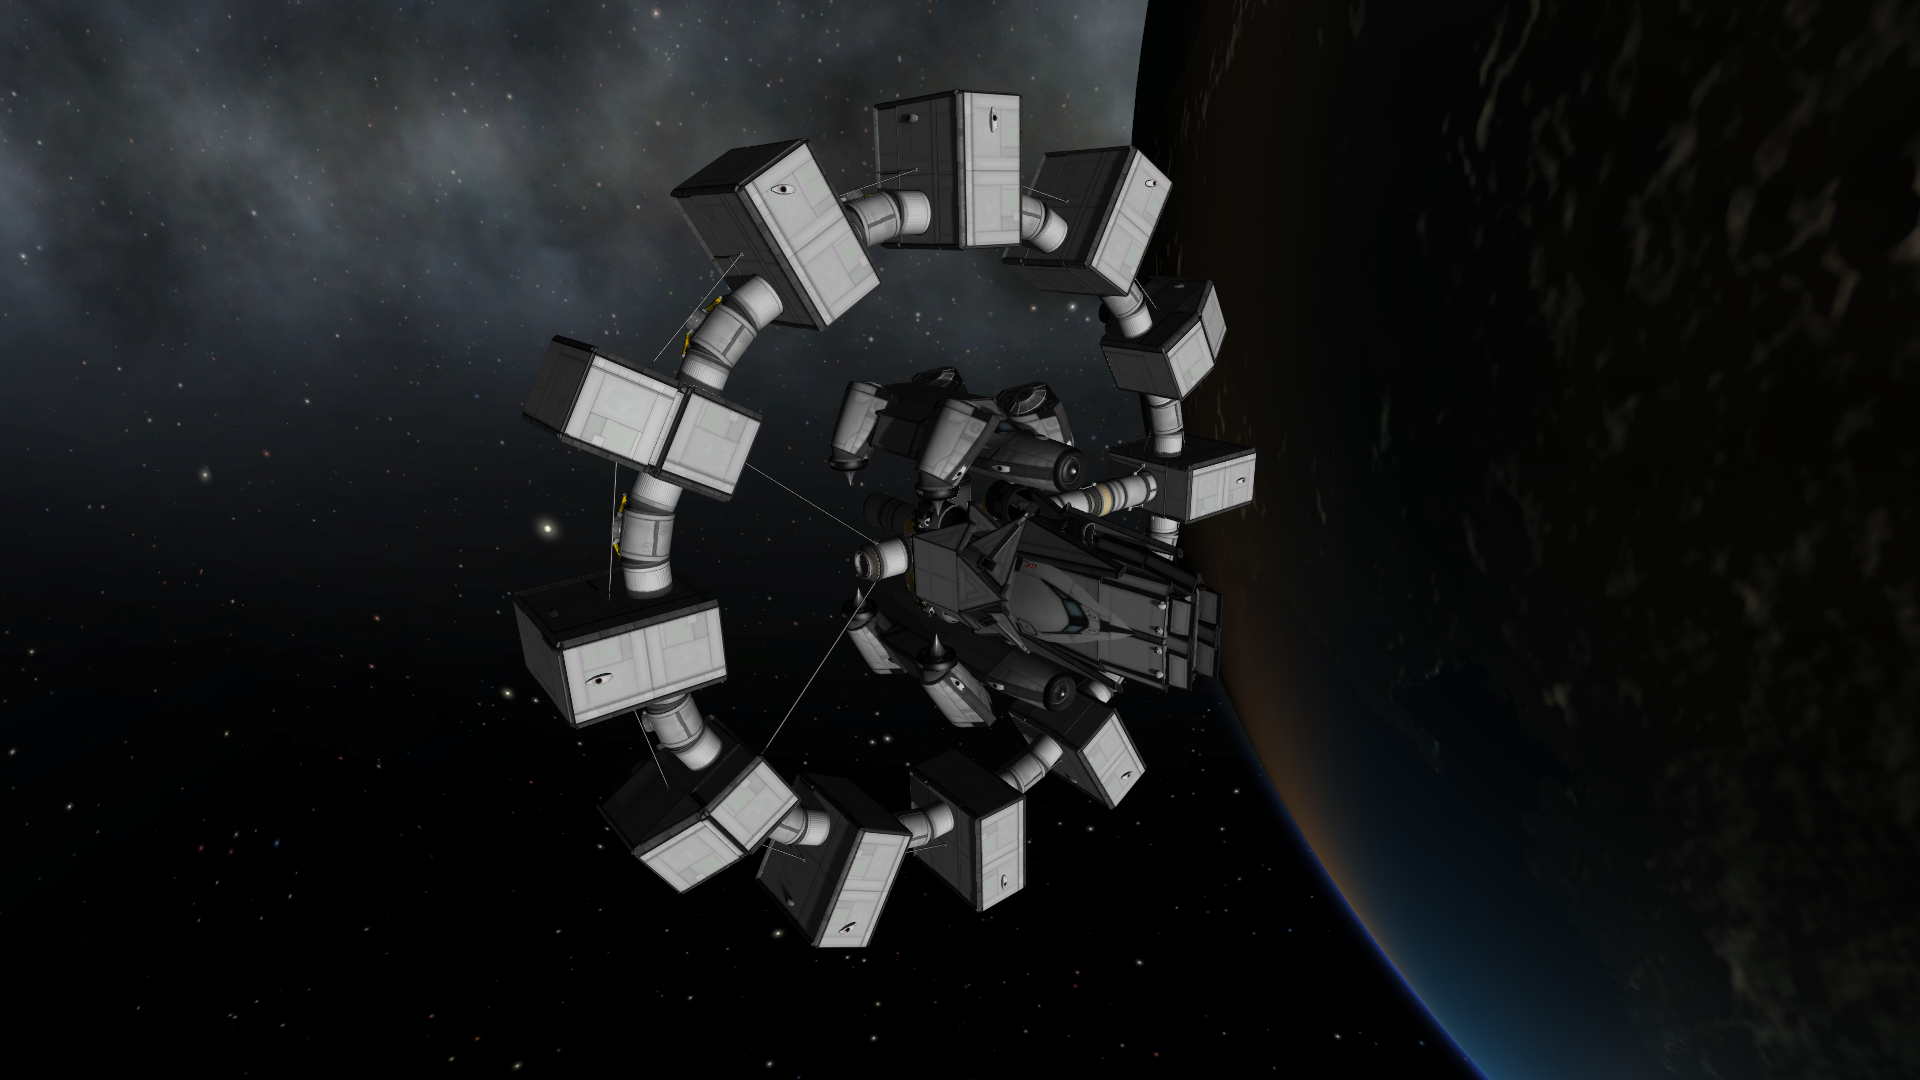 Interstellar's "Endurance" project avatar